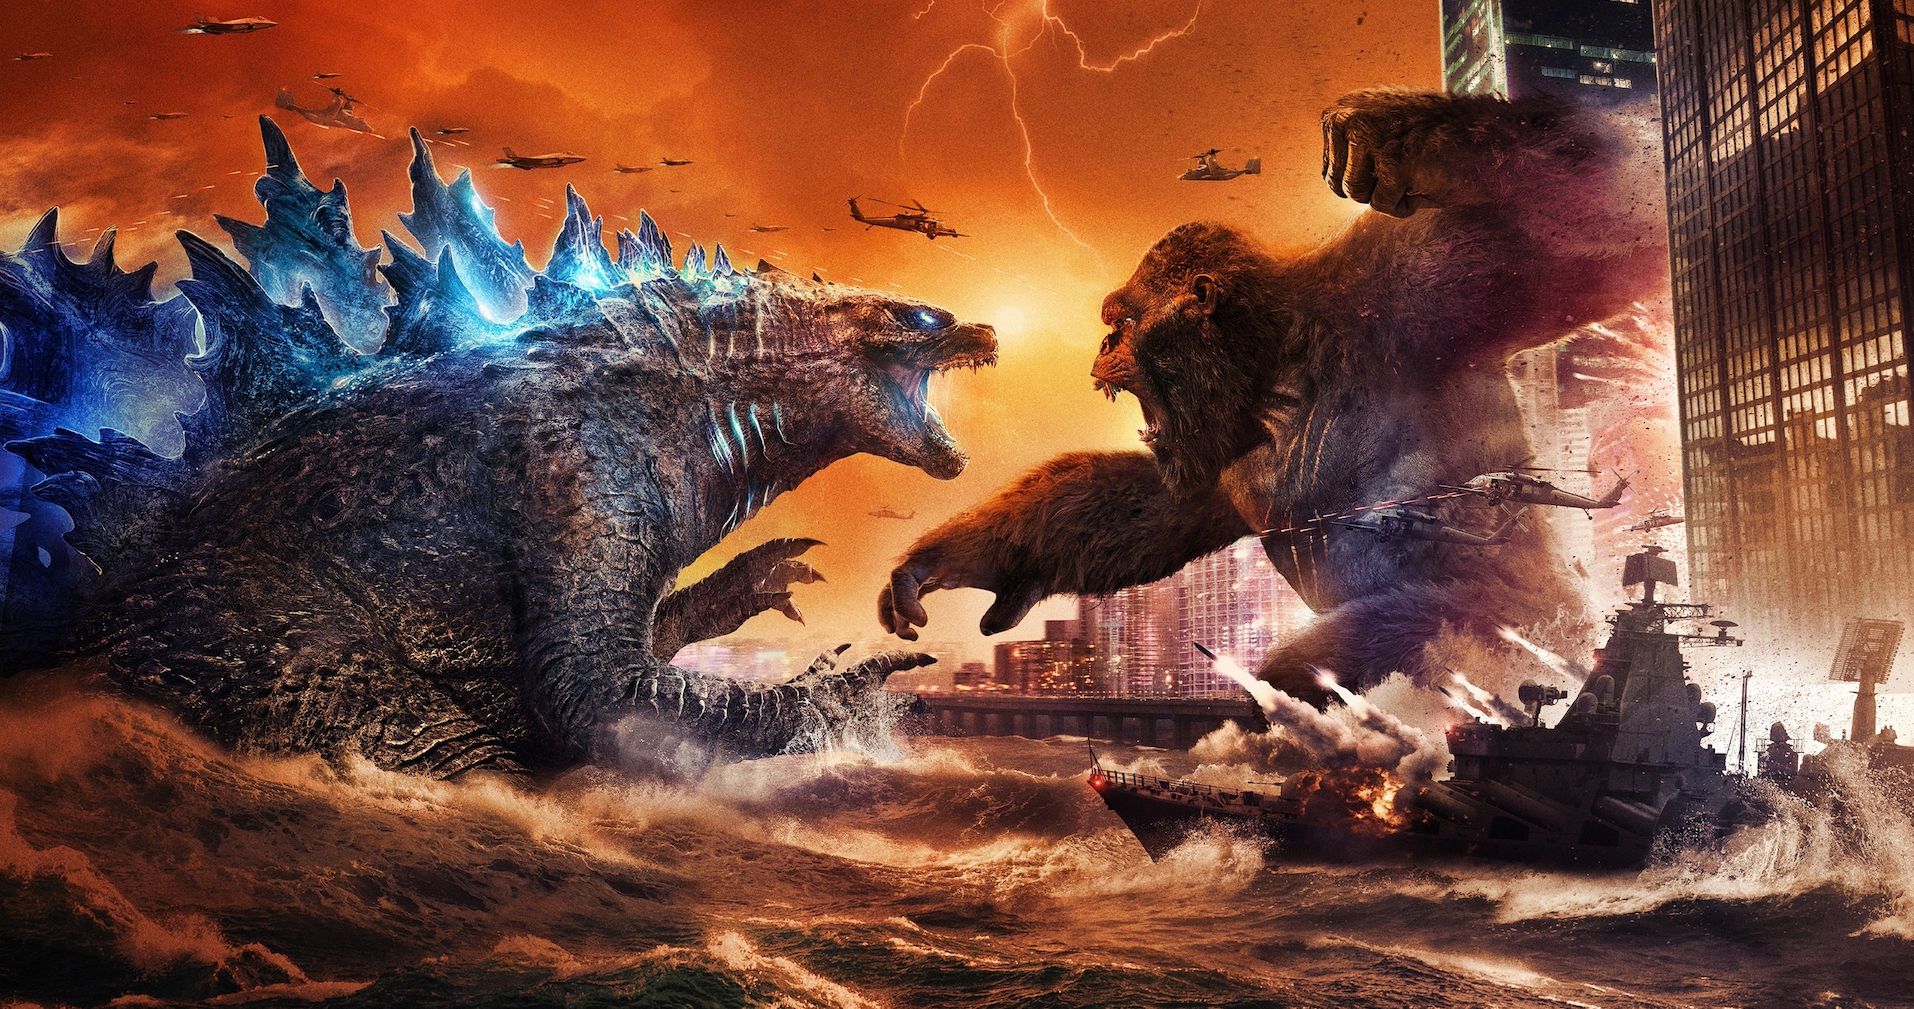 Godzilla Vs. Kong Director Declares a Definitive Winner Between the Two